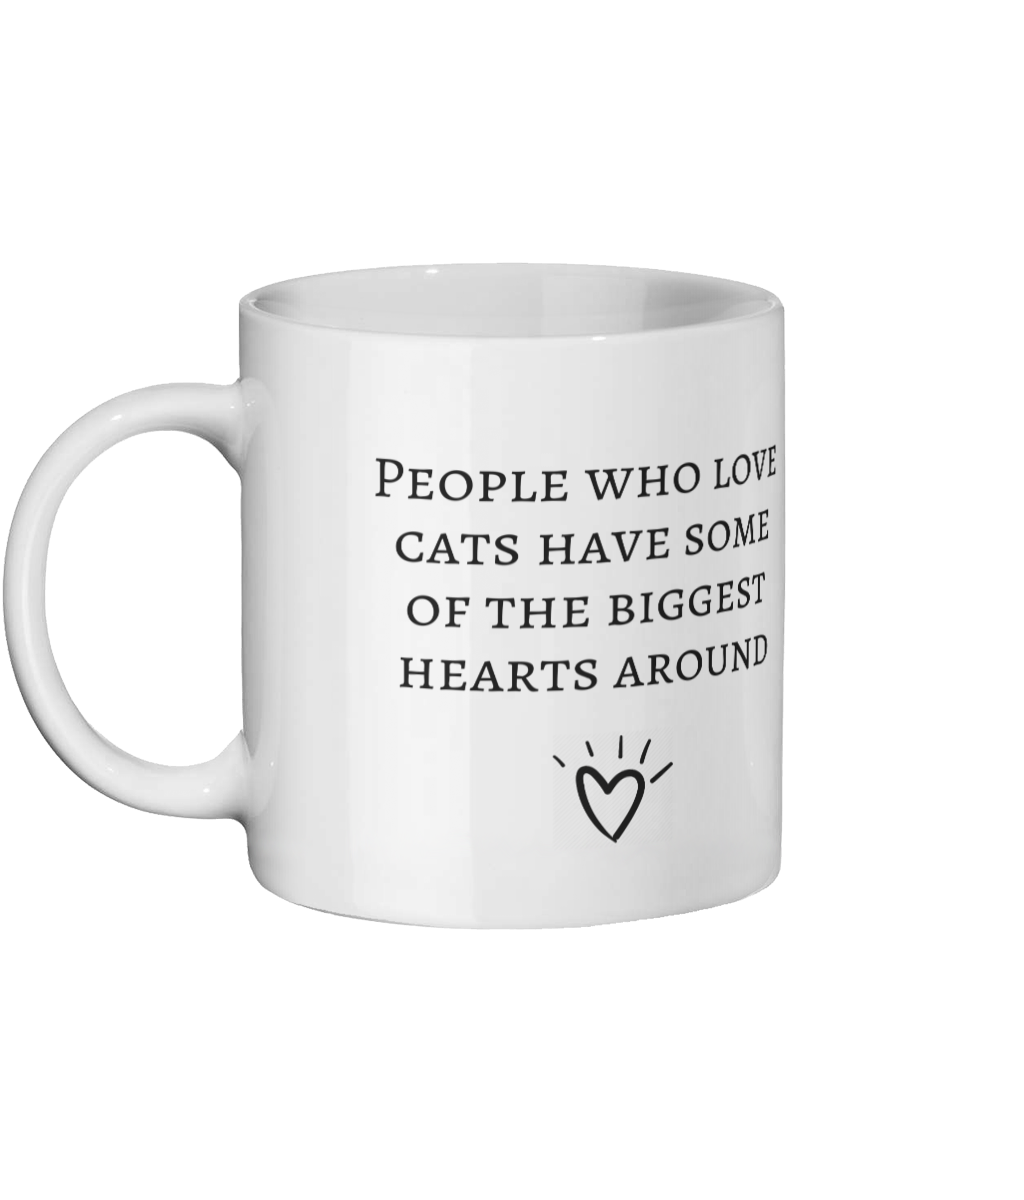 People who love cats - Ceramic Mug